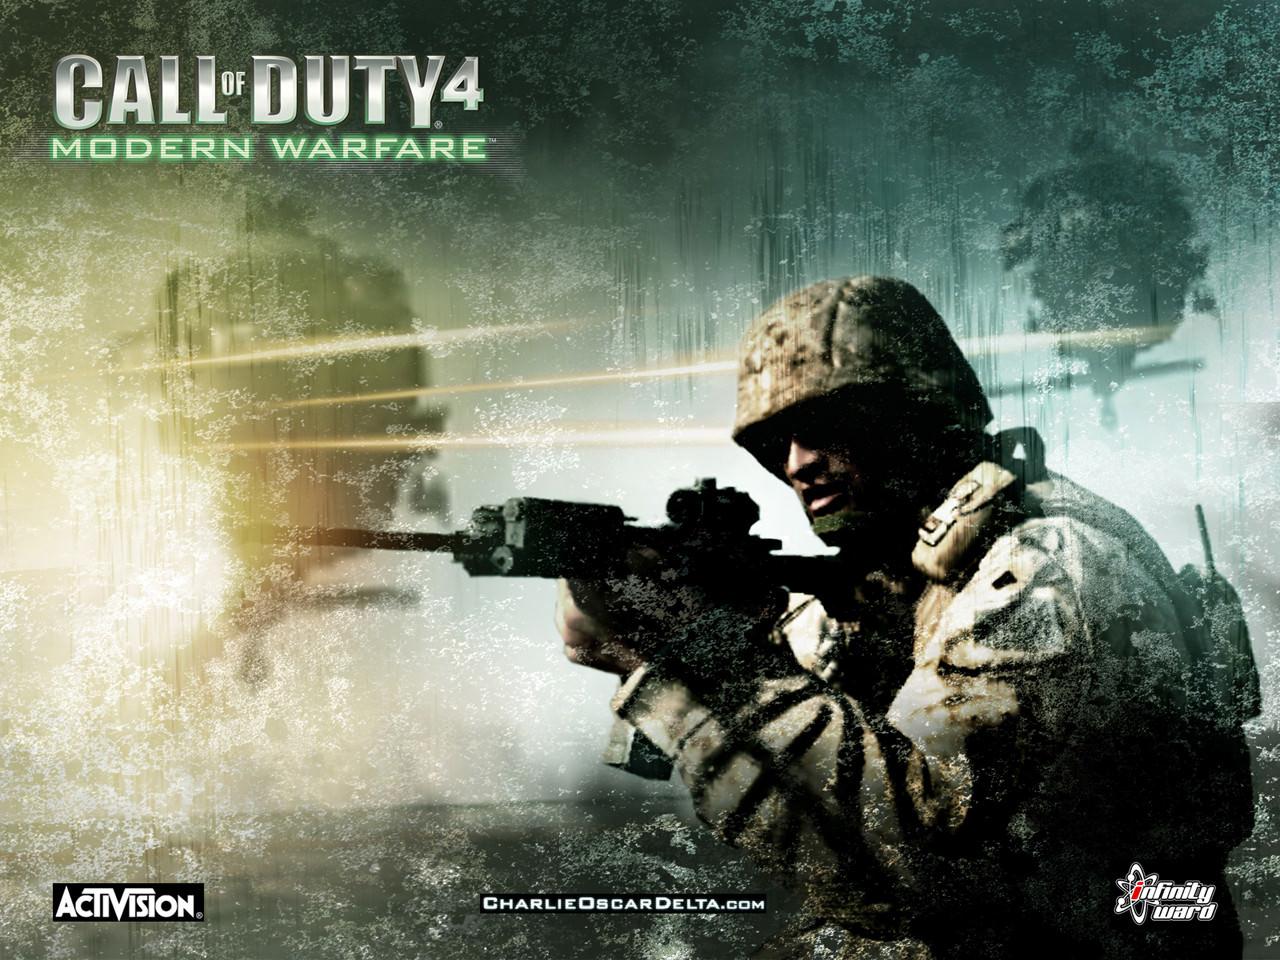 CoD4 Central. CoD4 Wallpaper. Modern Warfare Remastered